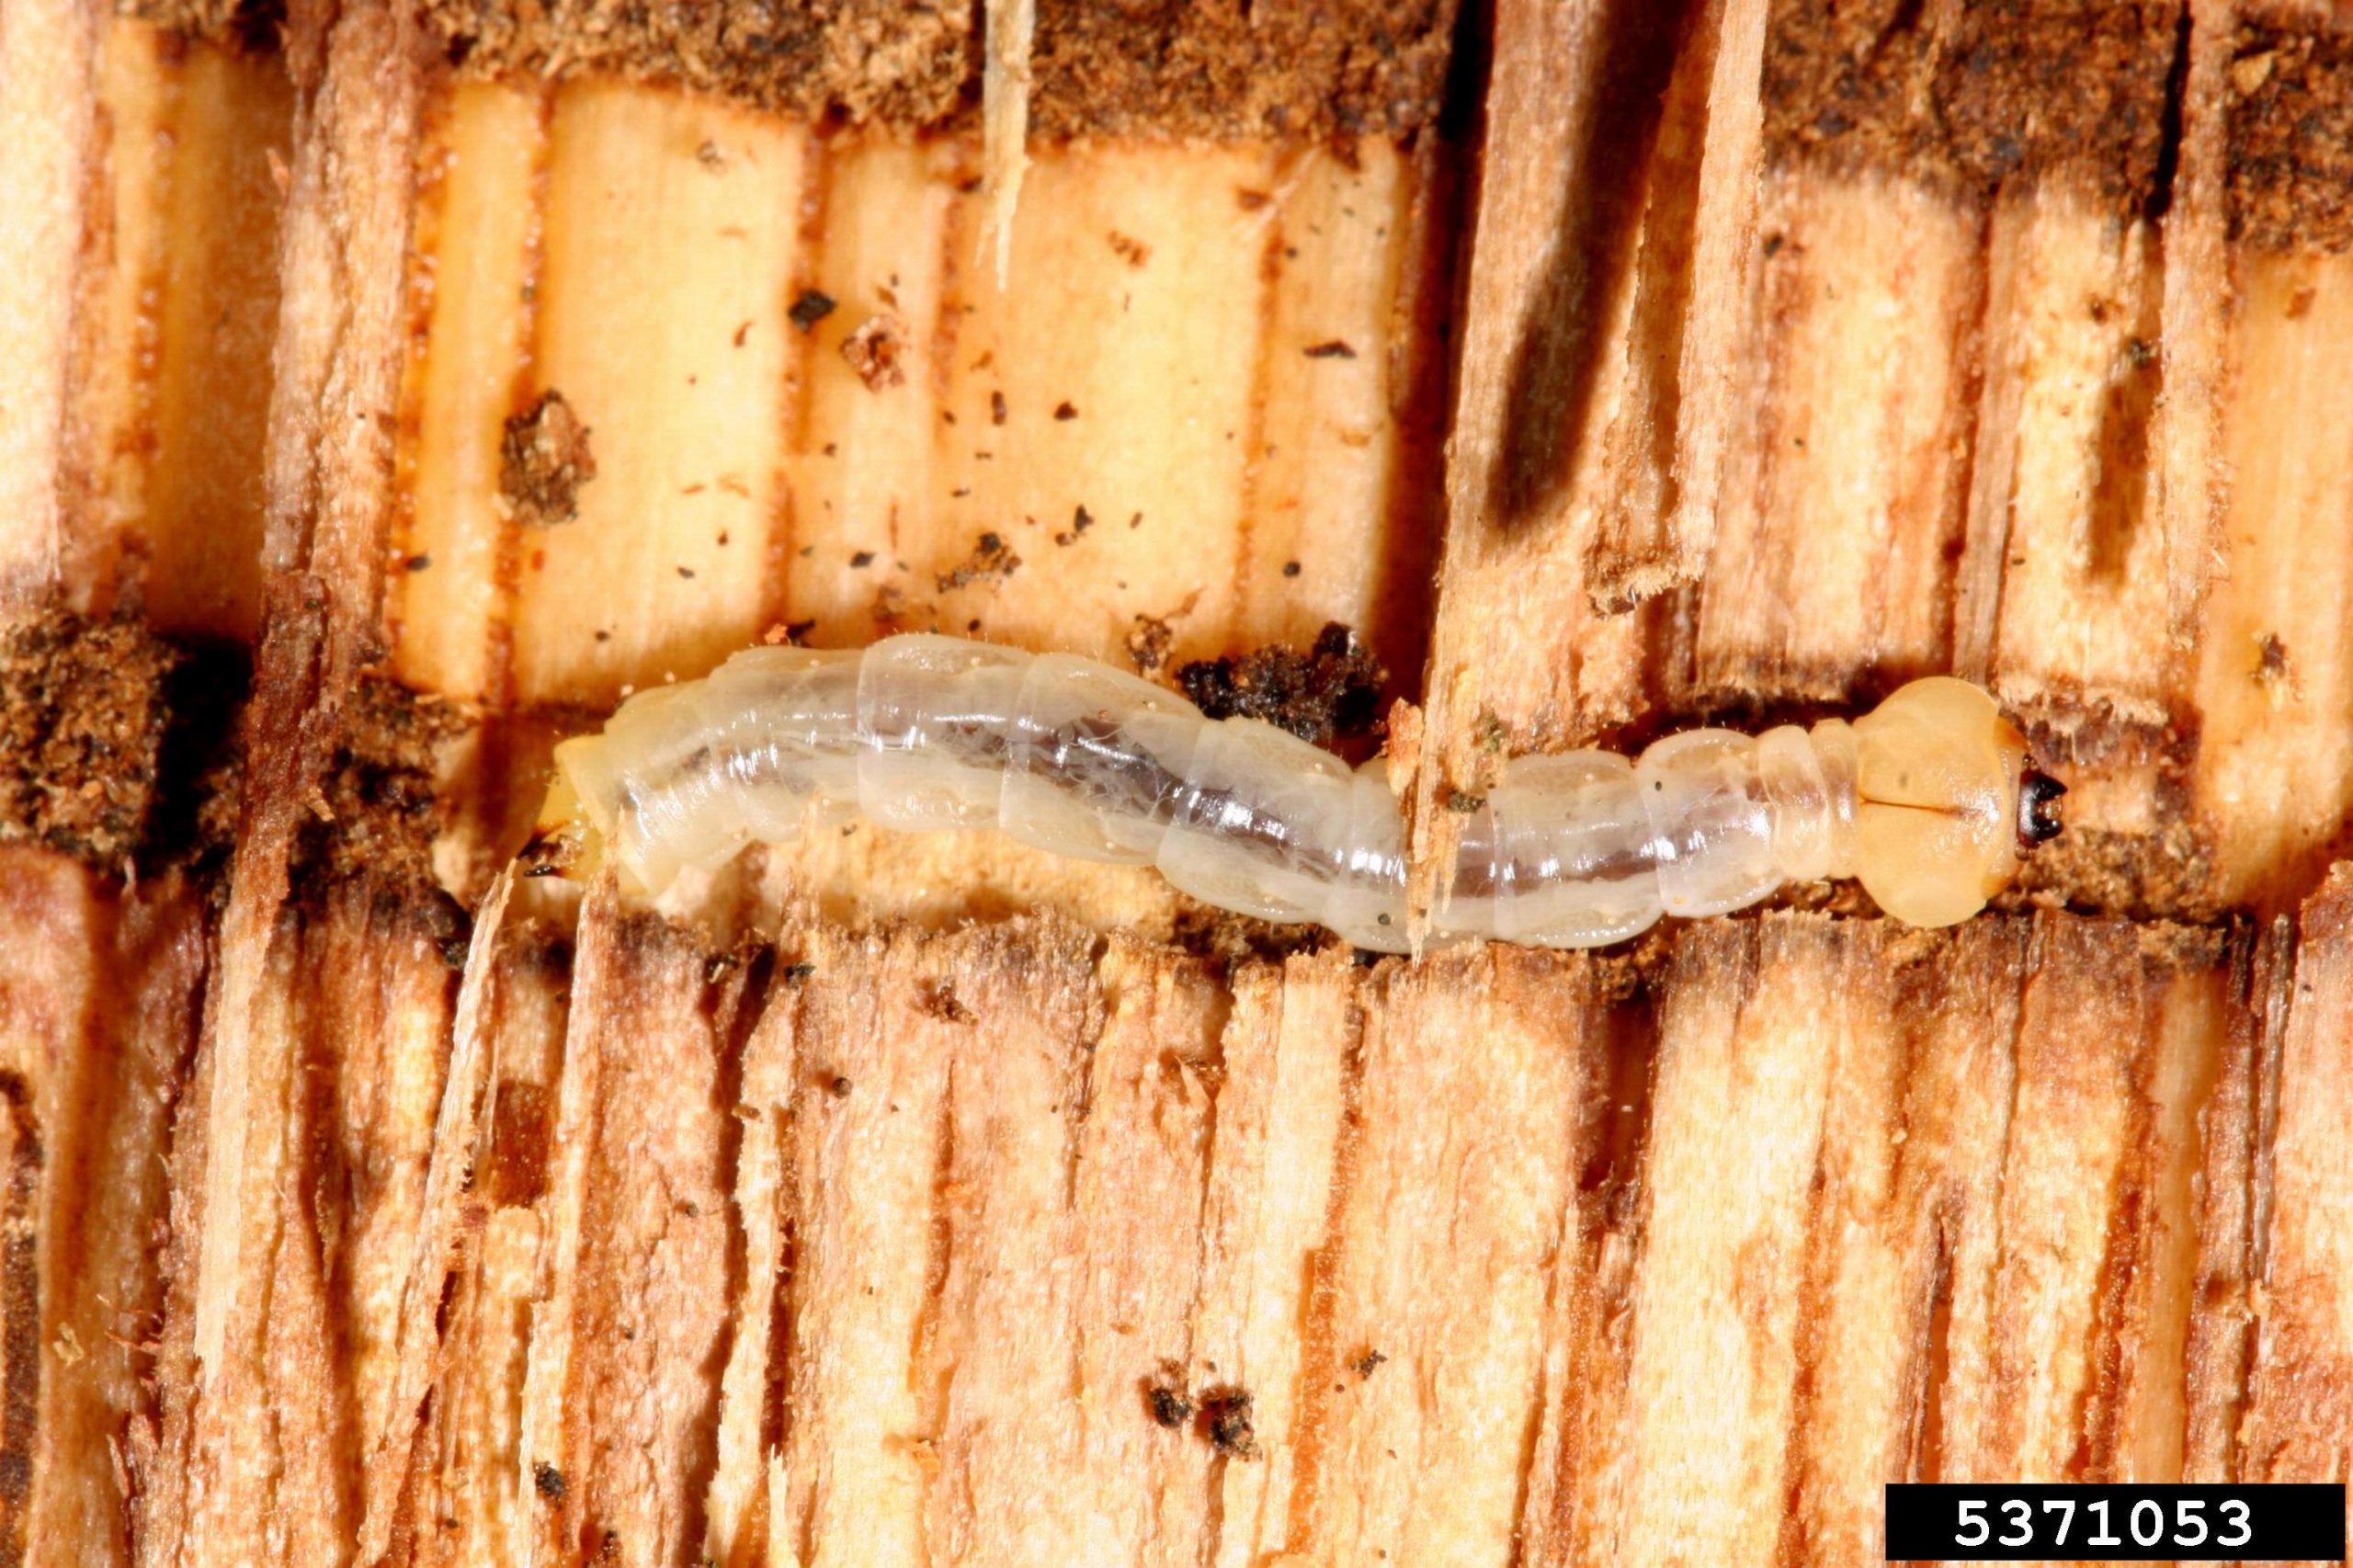 Larva of two-spotted oak buprestid Agrilus biguttatus, Gyorgy Csoka, Hungary FRI, Bugwood.jpg